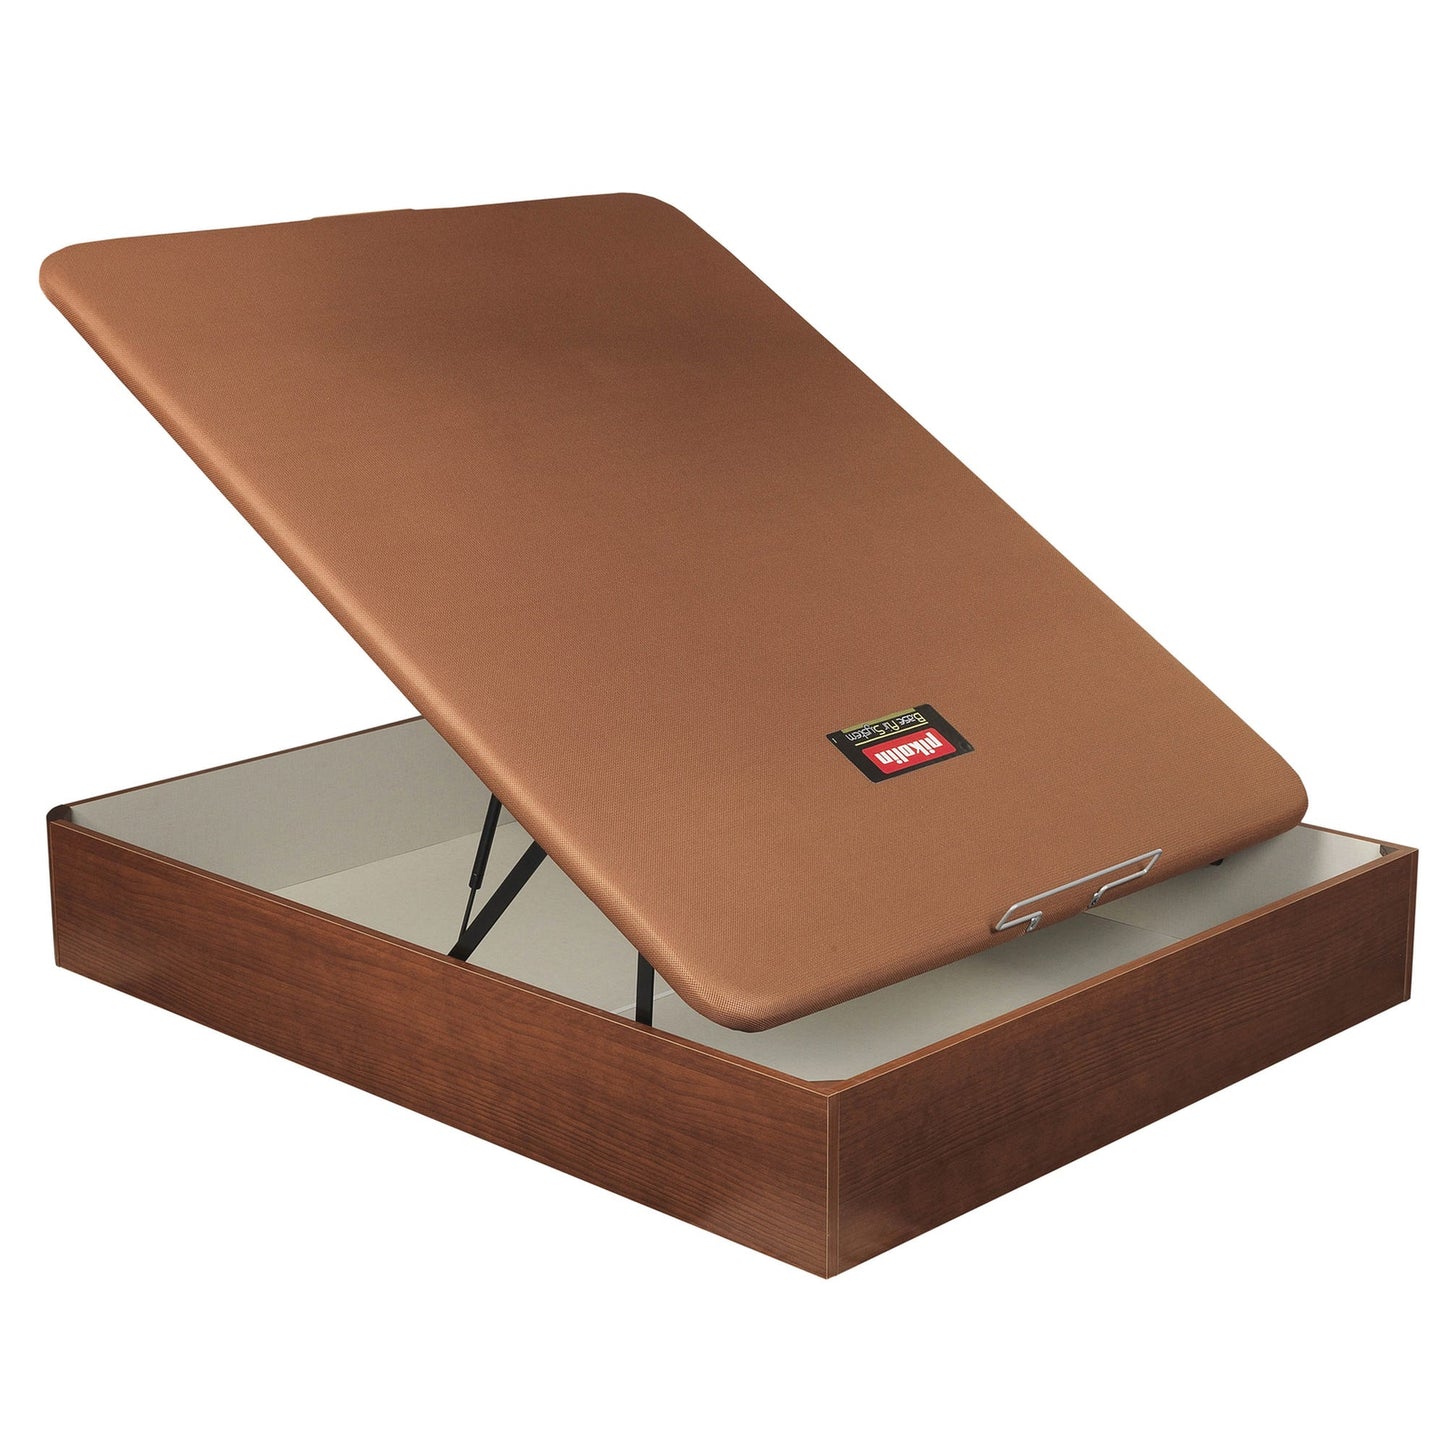 Canapé abatible de madera de color cerezo - NATURBOX CEREZO - 105x182